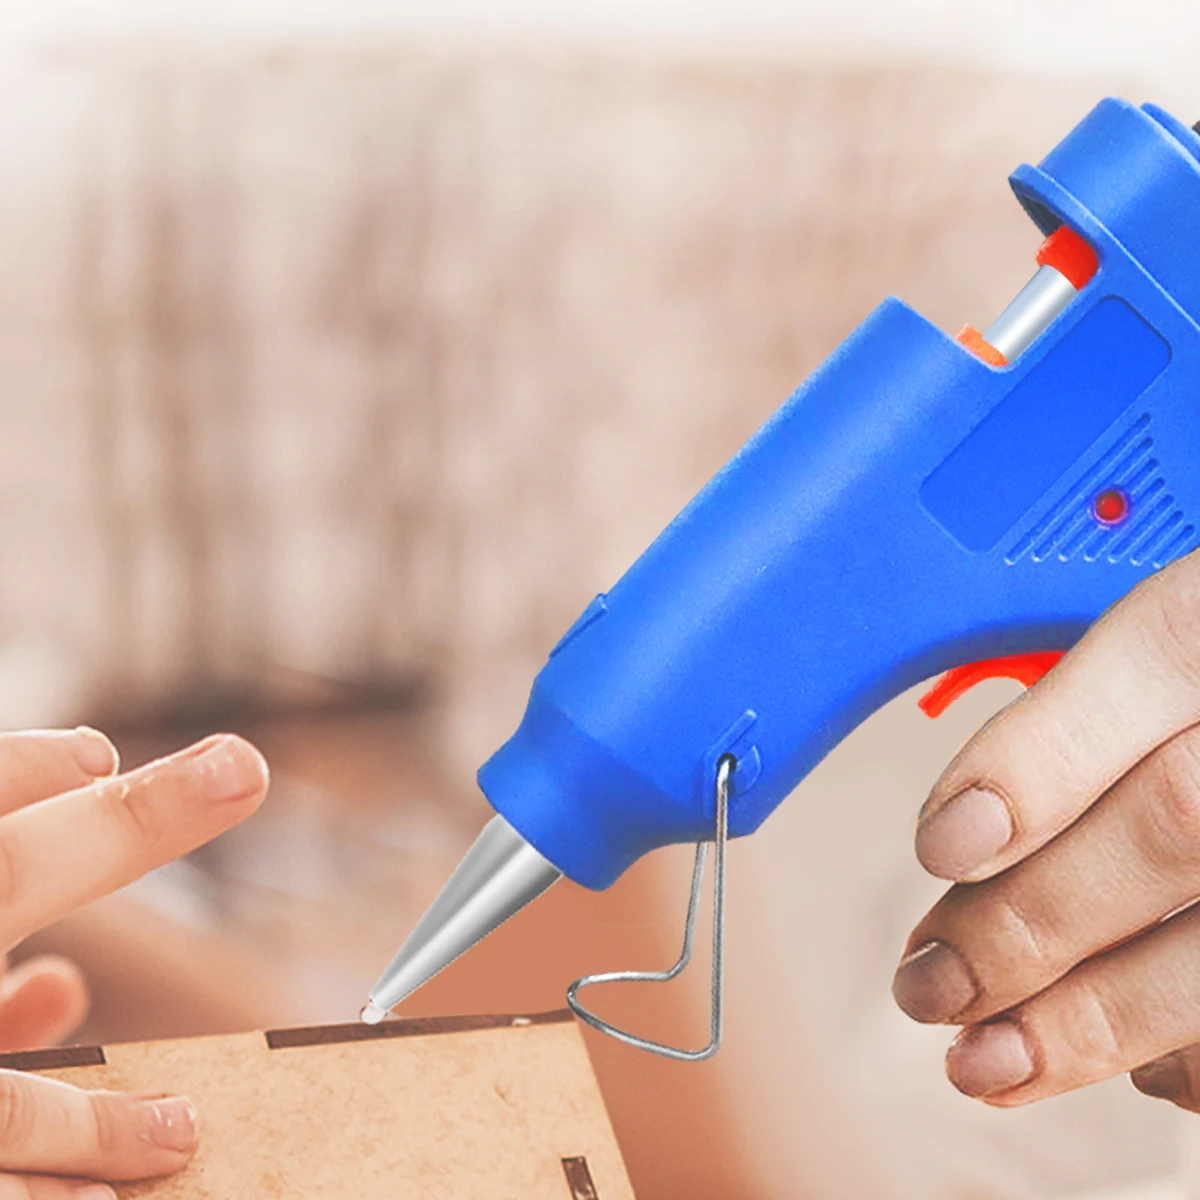 

20W High Temp Heater Melt Hot Glue Gun Home DIY Repair Tool EU Use 7mm Glue Sticks Optional Base Heat Mini Gun By PROSTORMER